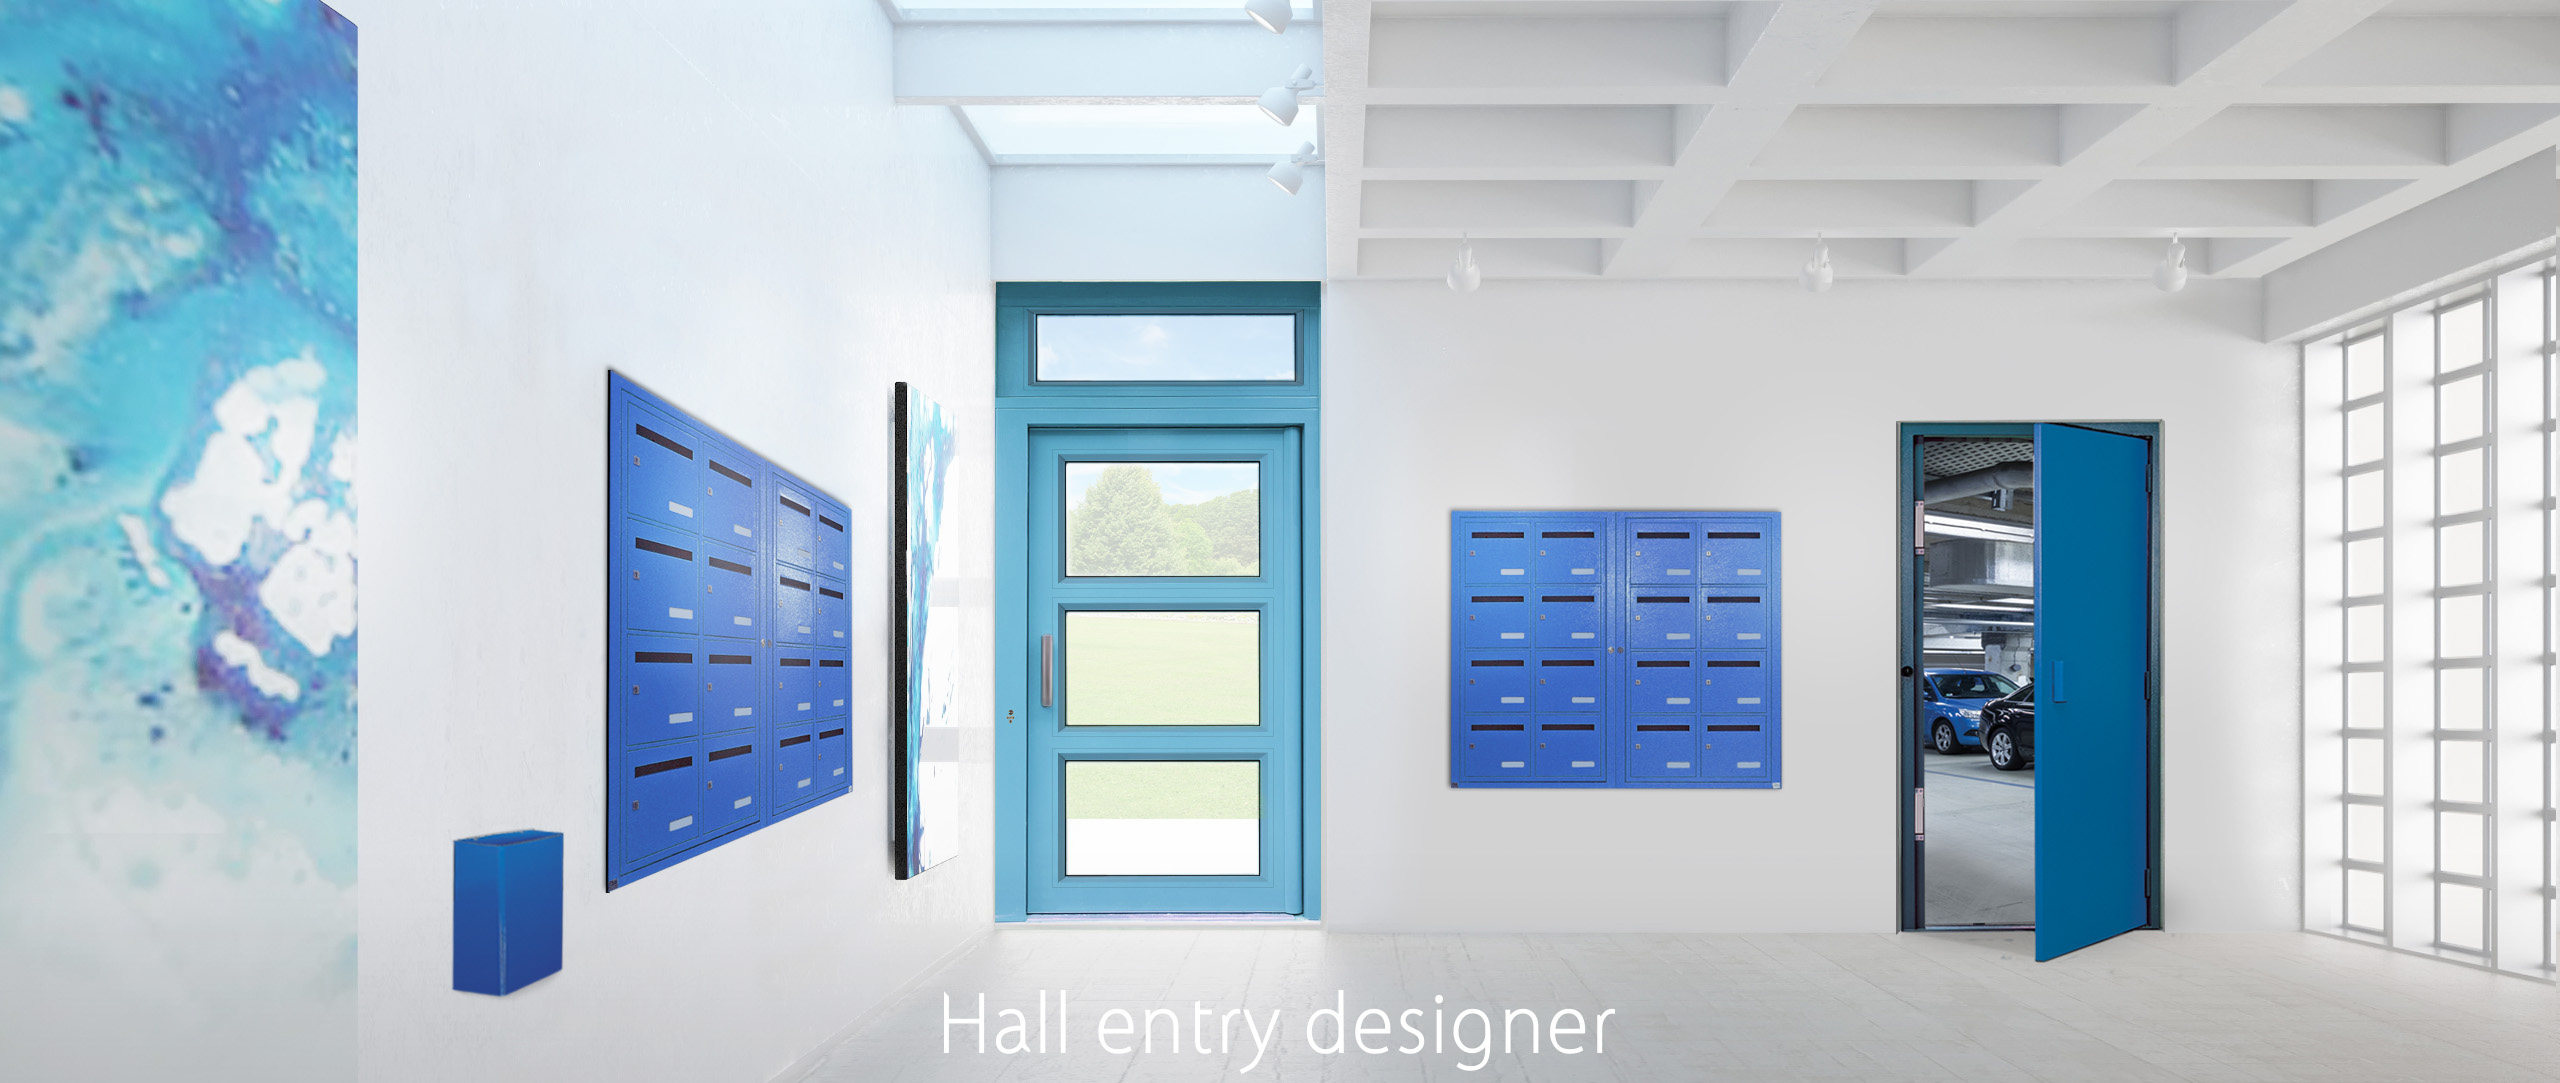 cibox-createur-espace-Hall-entree-2560x1083-EN.jpg